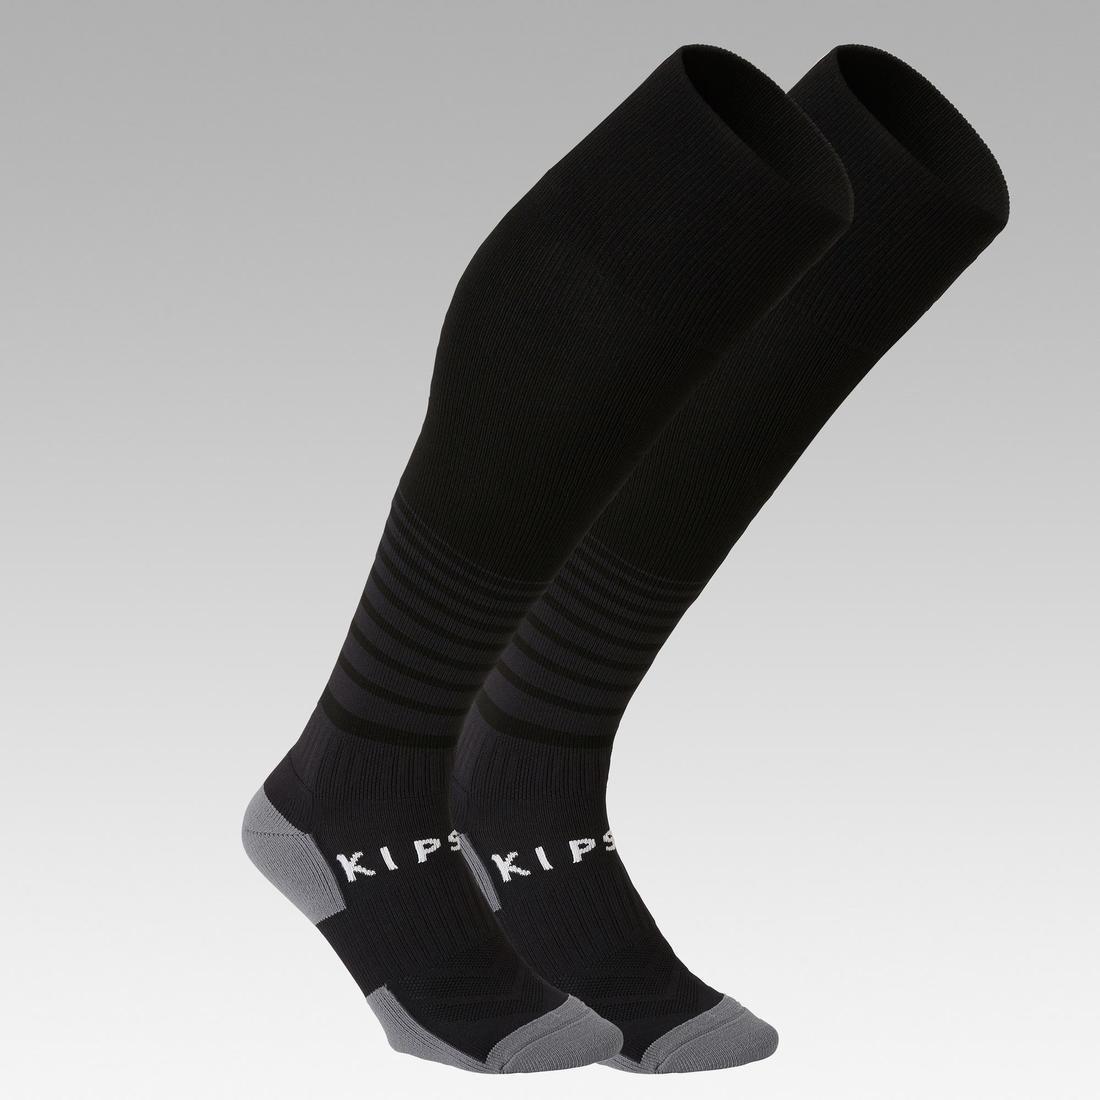 KIPSTA - Kids Football Socks F500 - Navy With Stripes, Bright Indigo